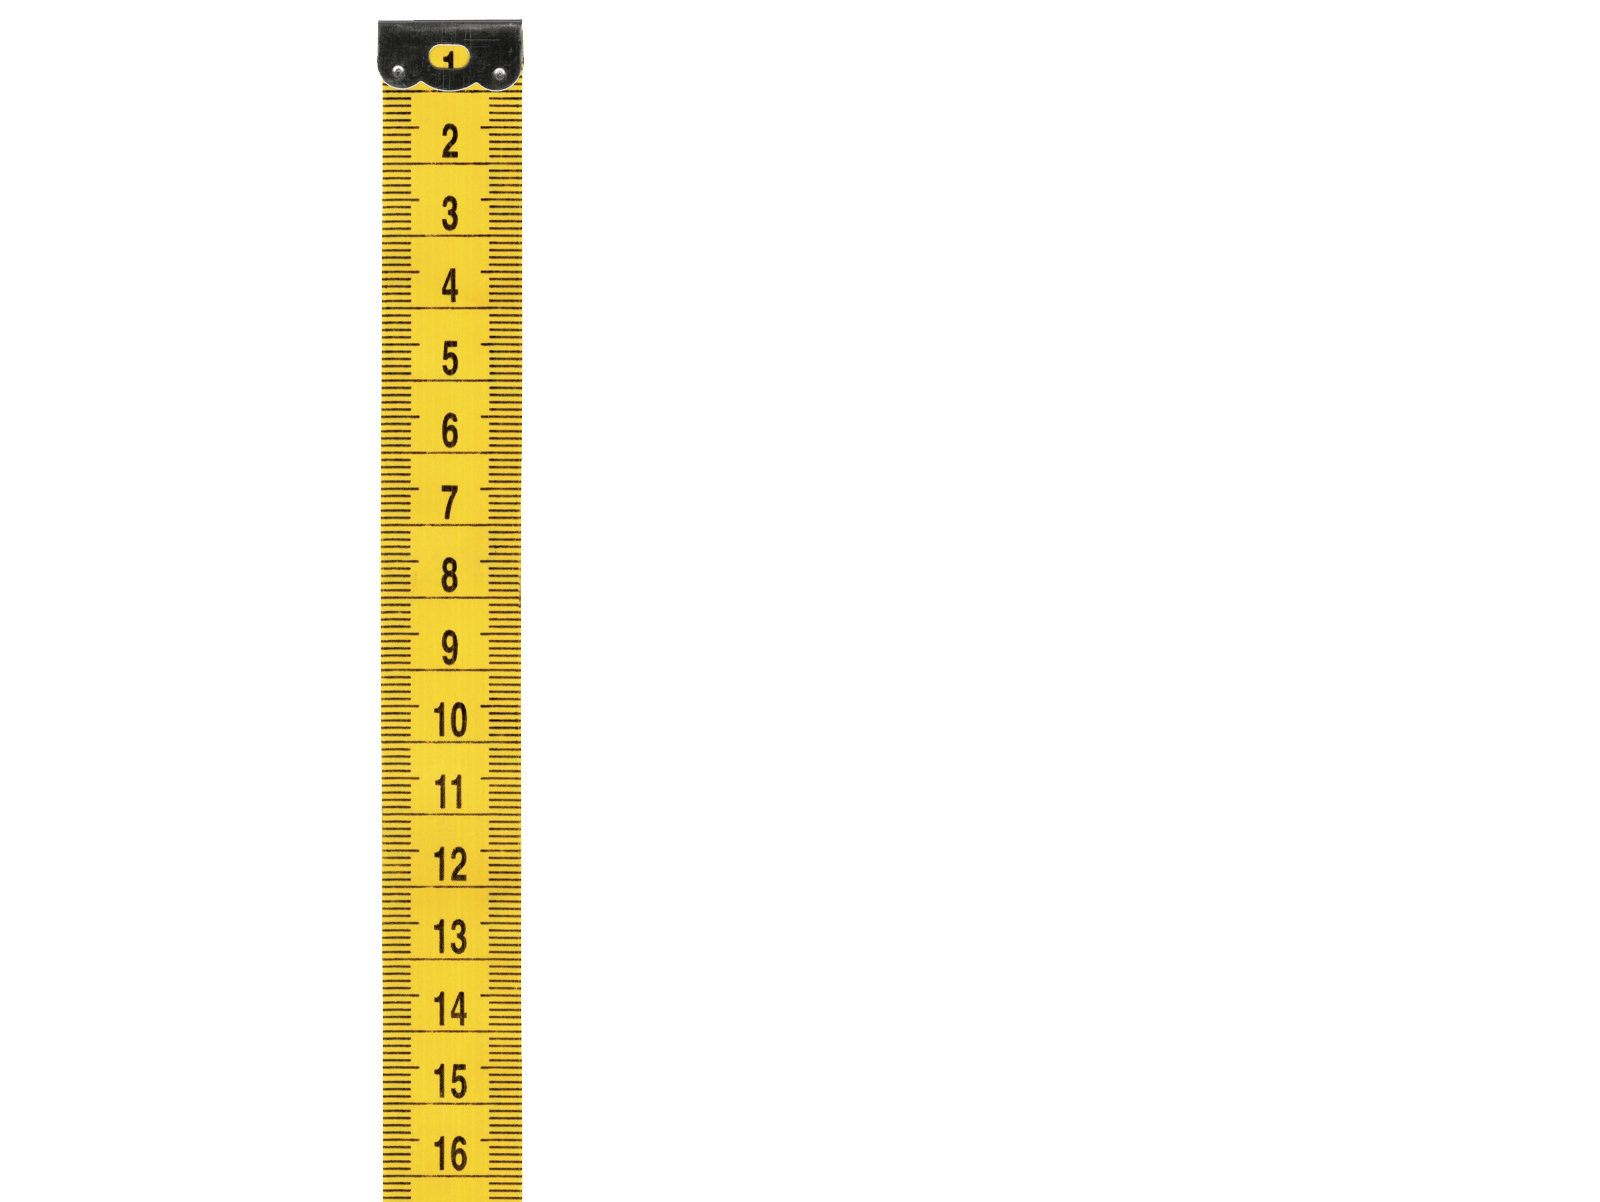 ruler clipart measurement